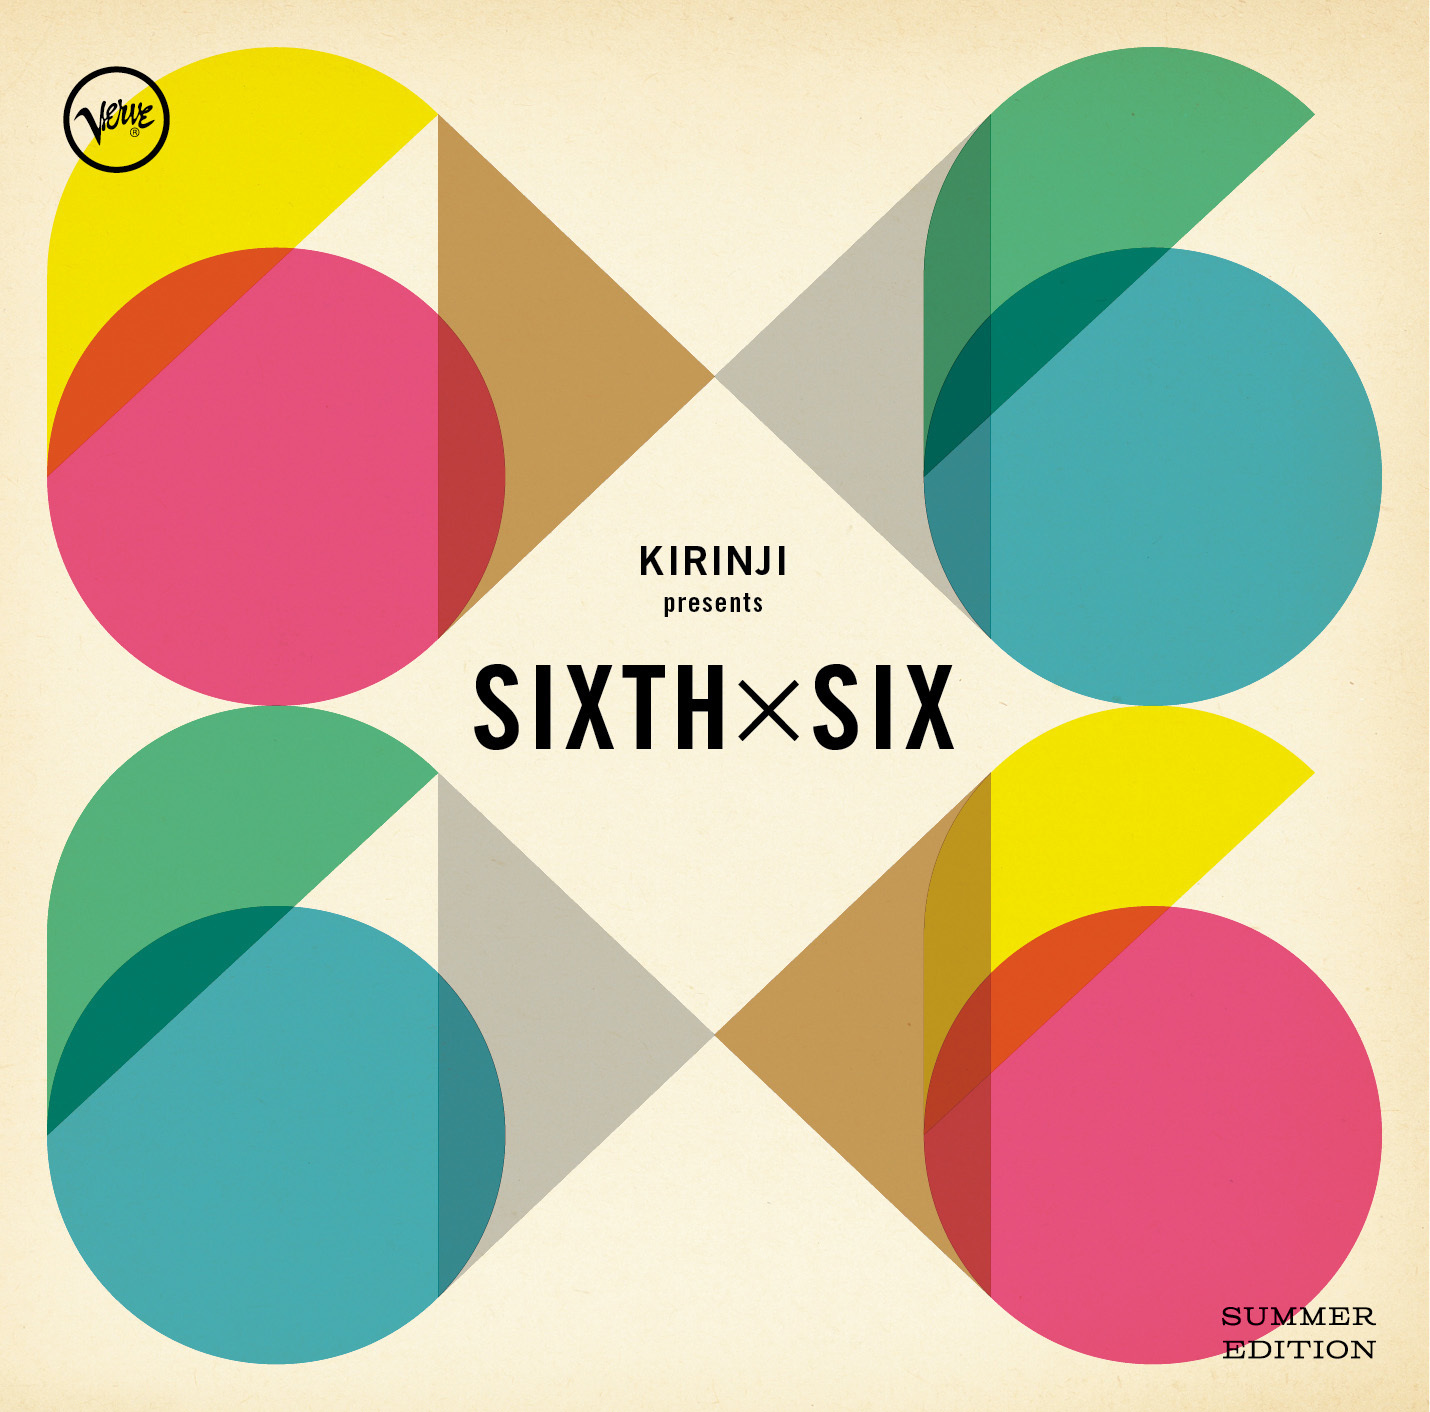 KIRINJI presents SIXTH×SIX –SUMMER EDITION-